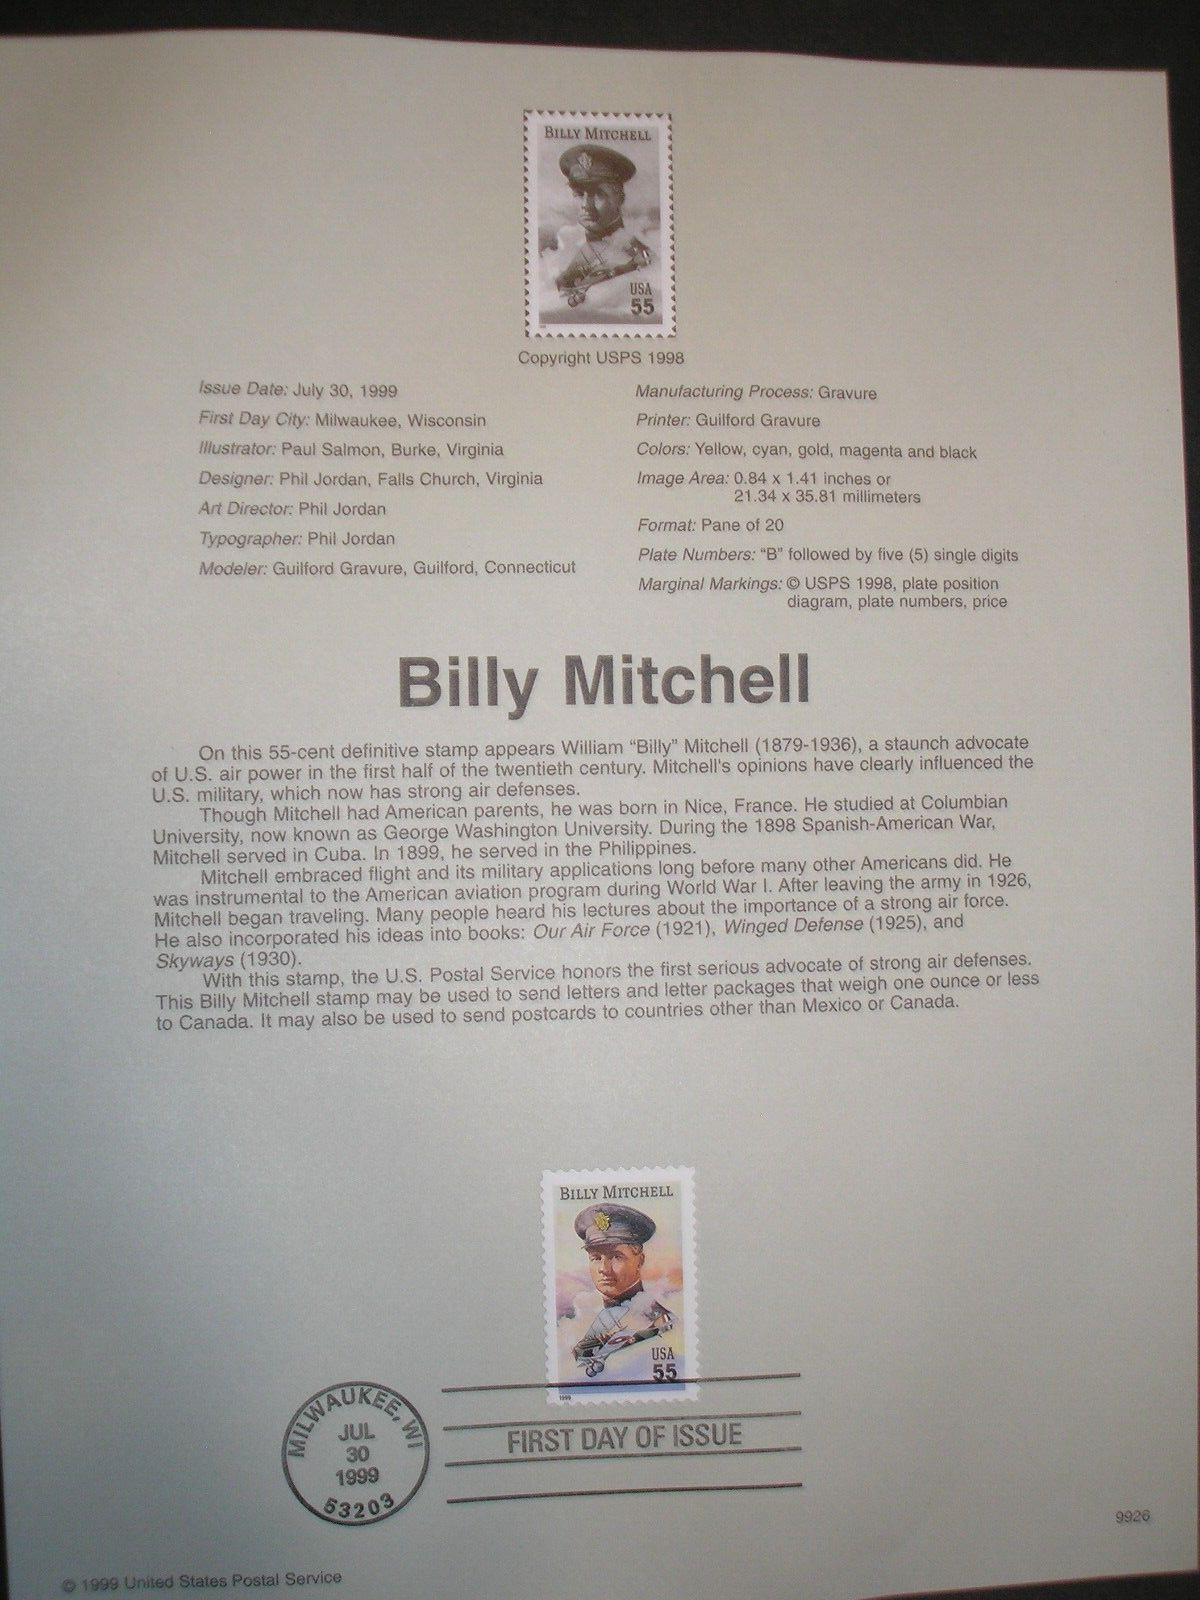 USPS Souvenir Page for .55 Scott 3330 Billy Mitchell Stamp.